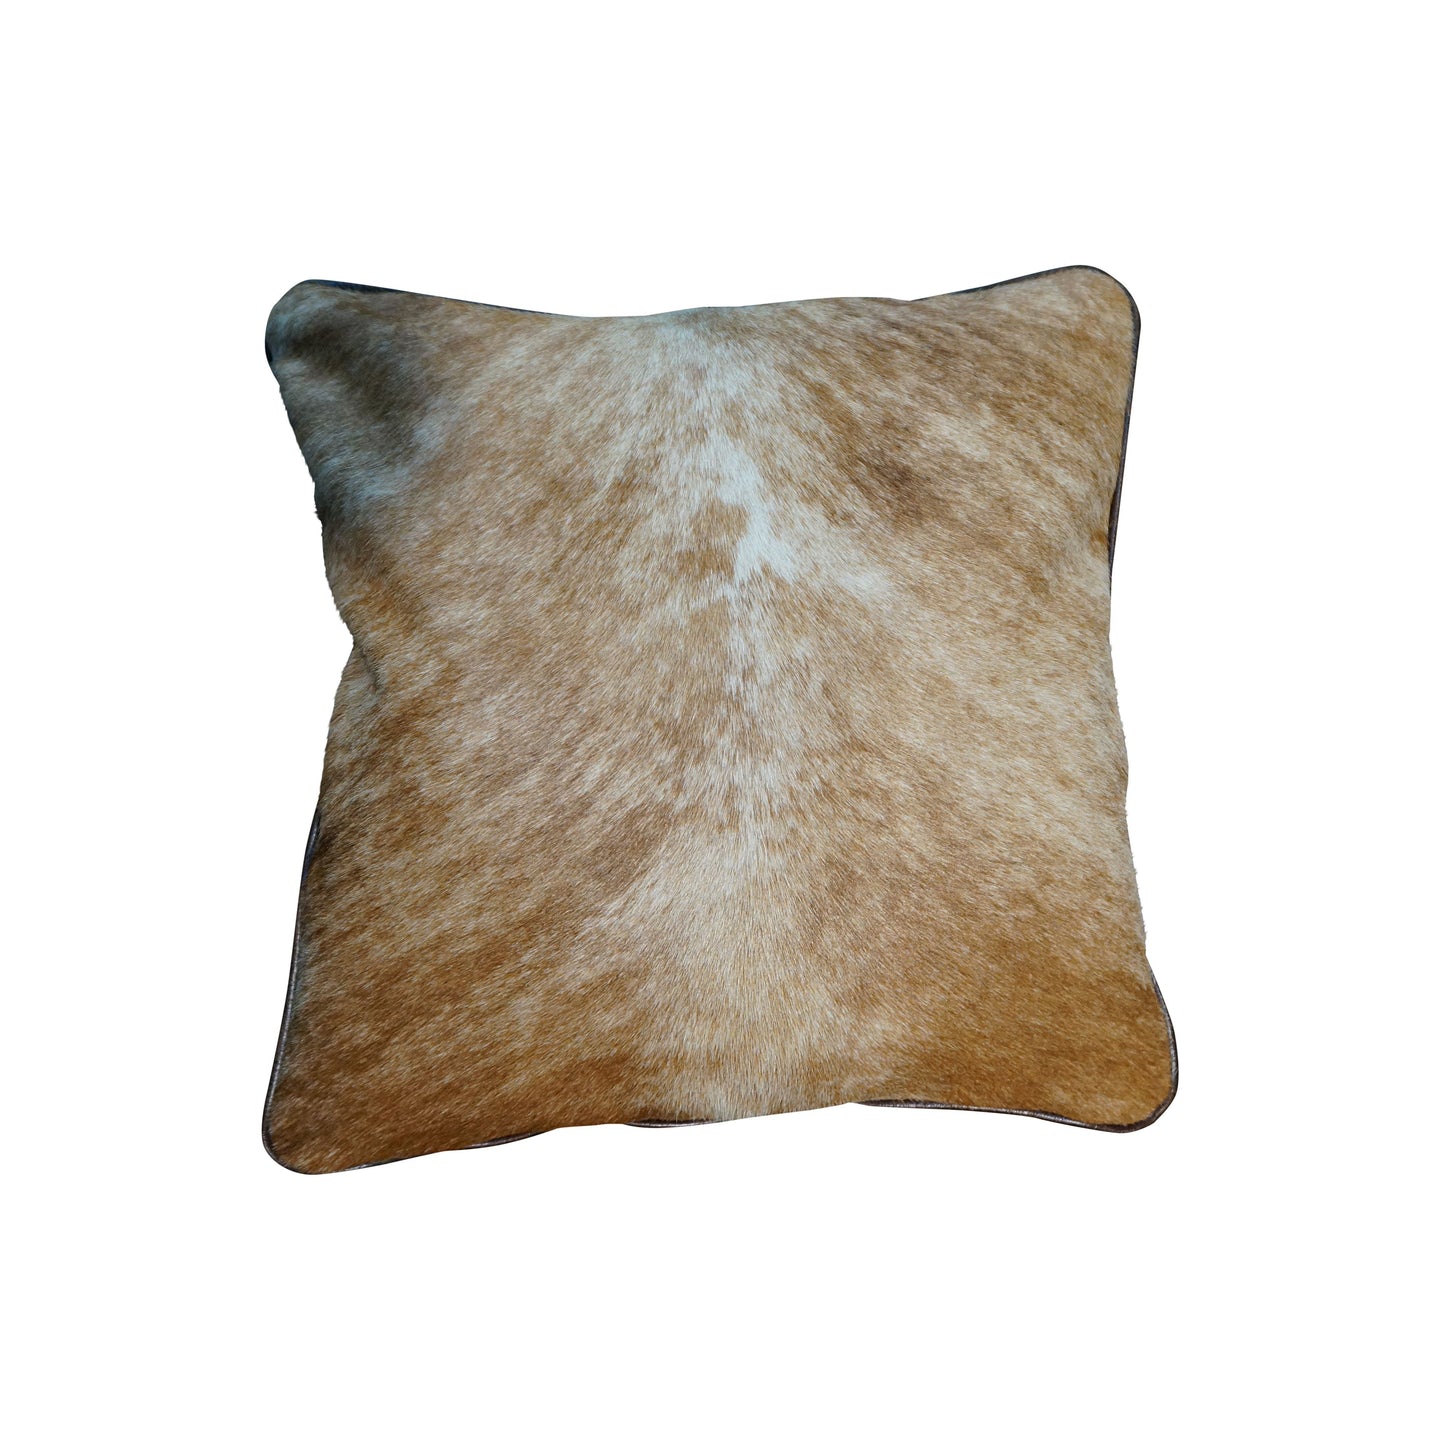 Cowhide Square Pillow - Light Brindle